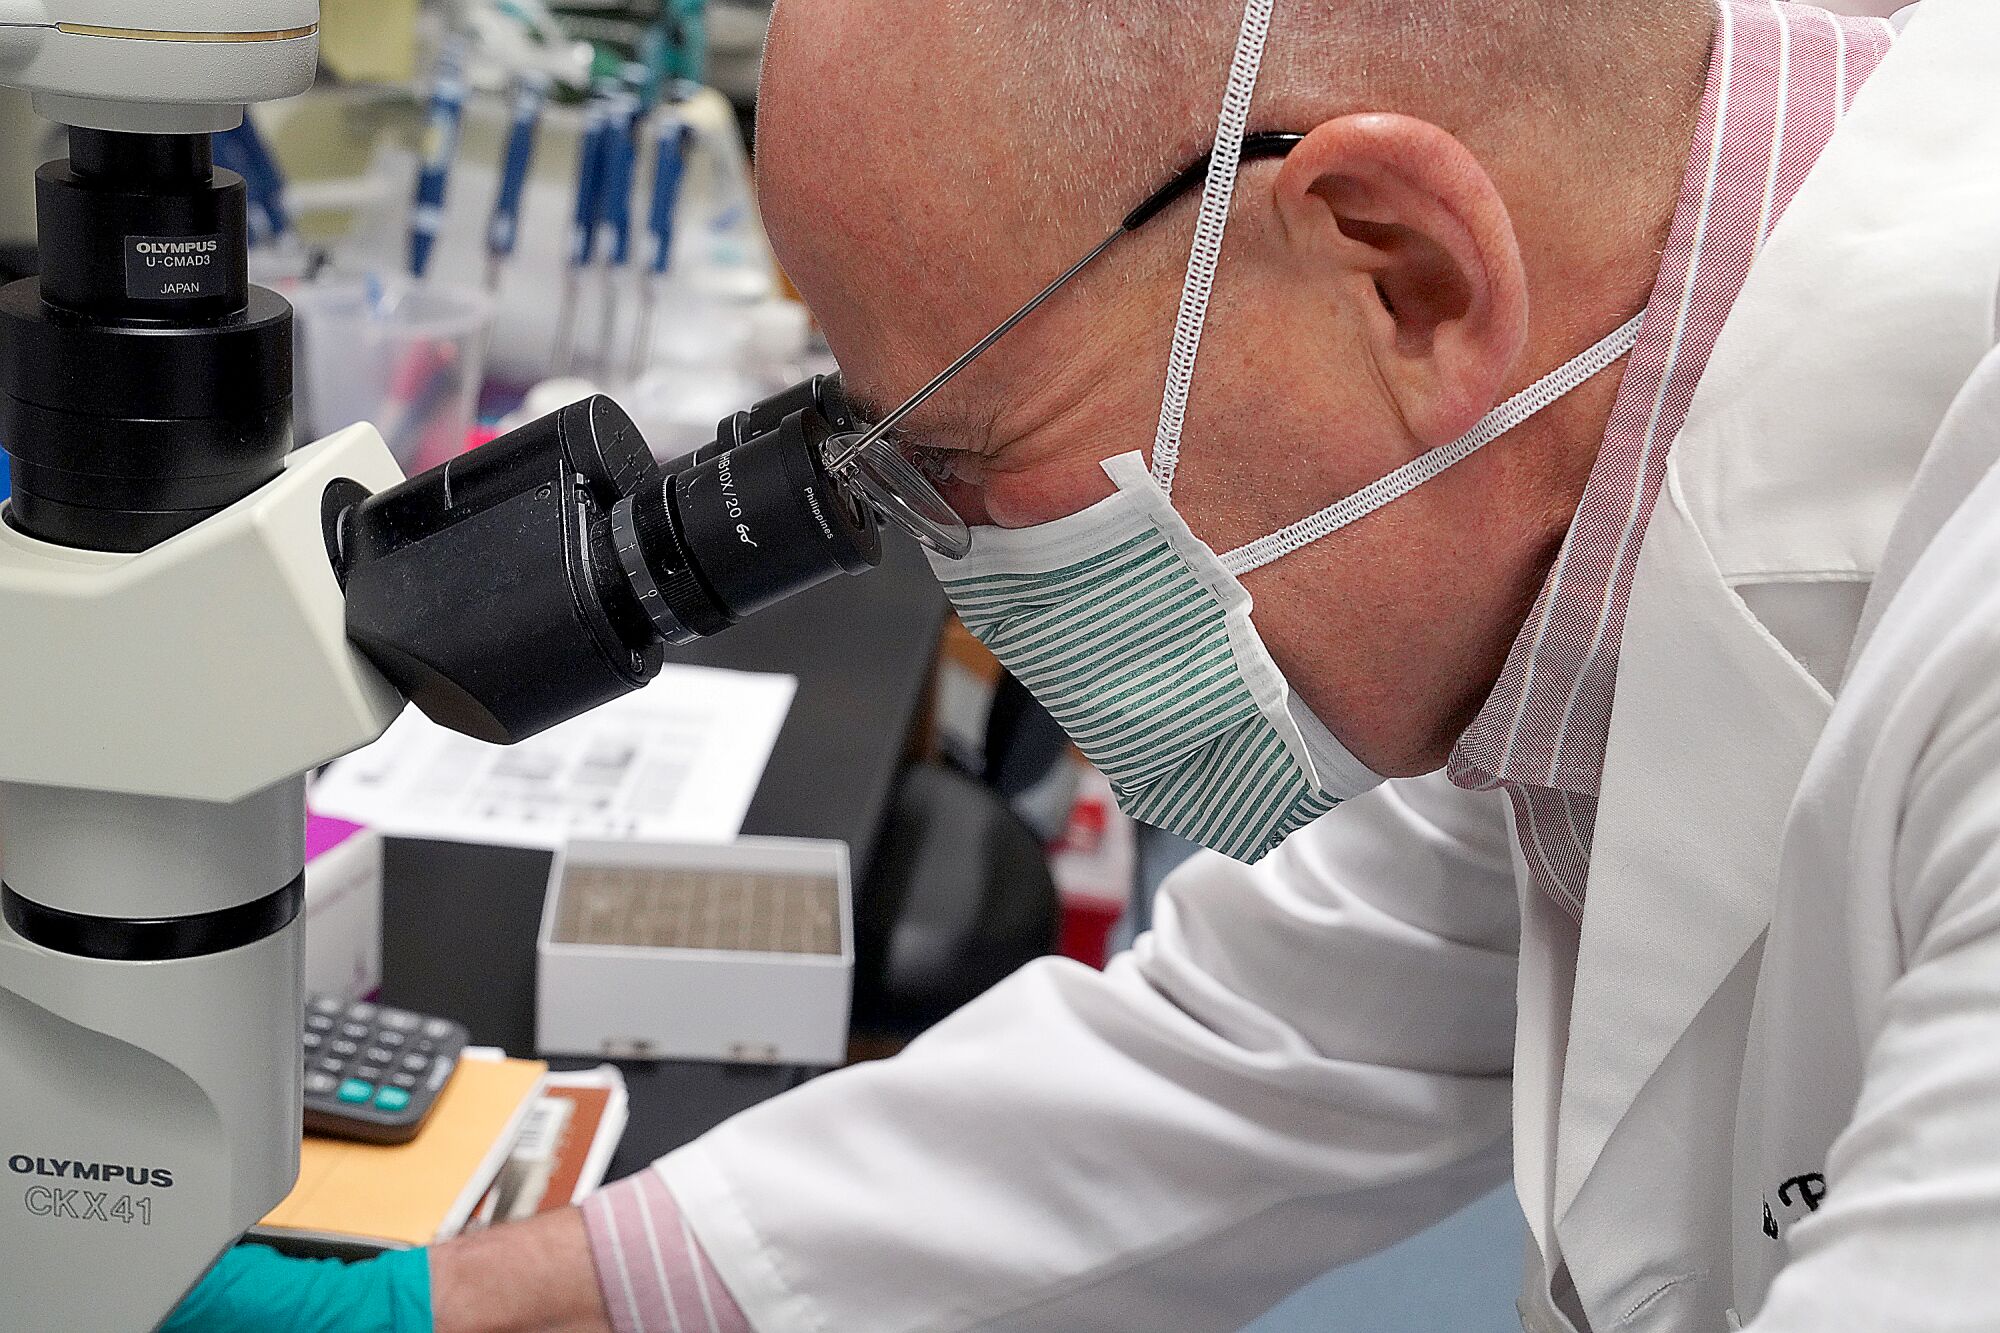  Scientist Chris Parks looks into a lab instrument.